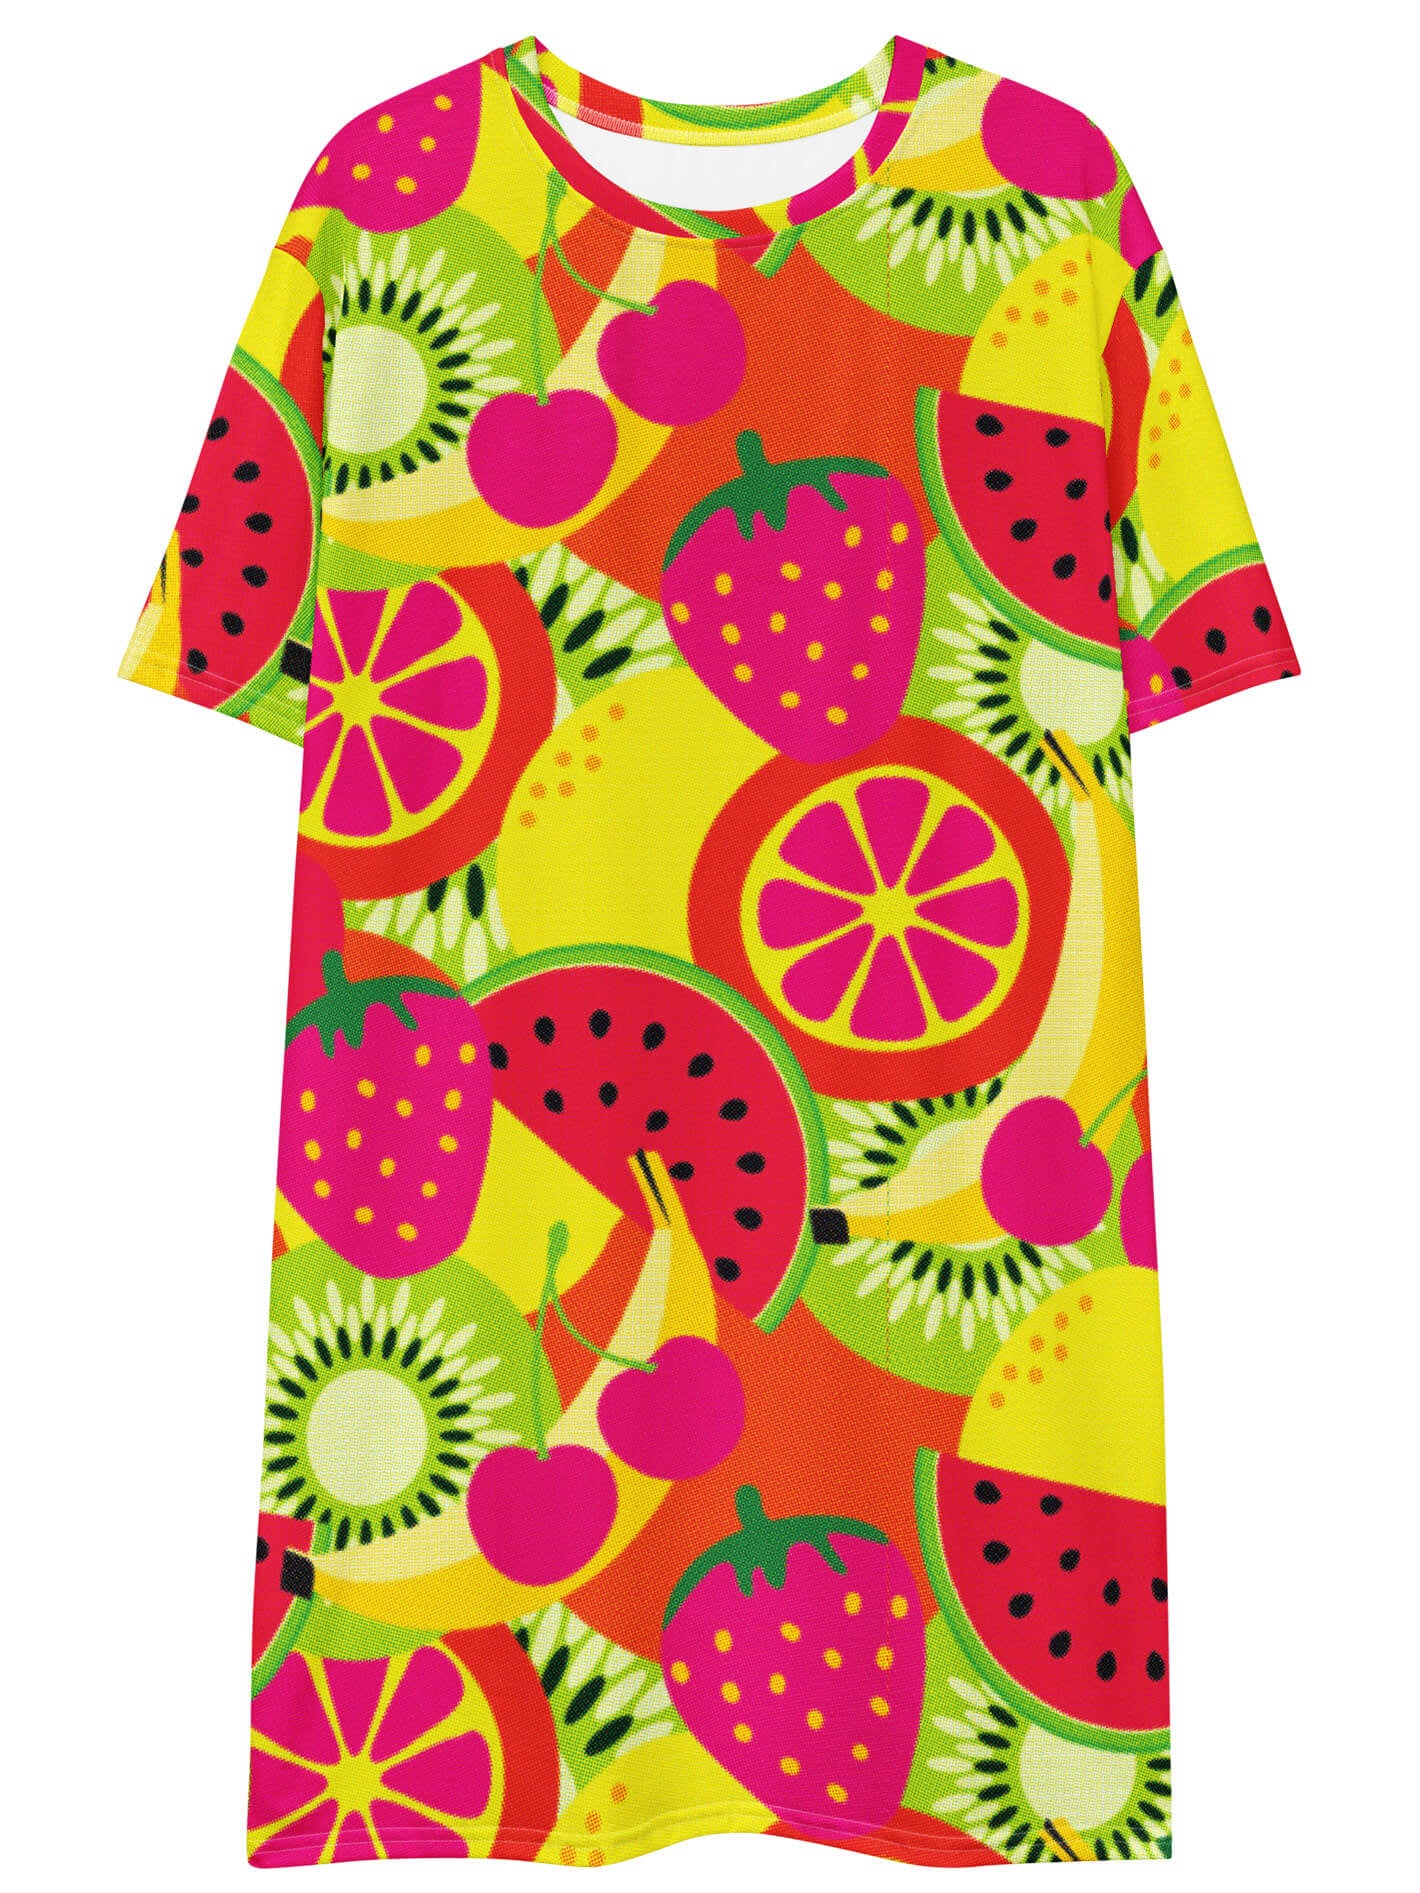 Colorful fruit t-shirt dress.